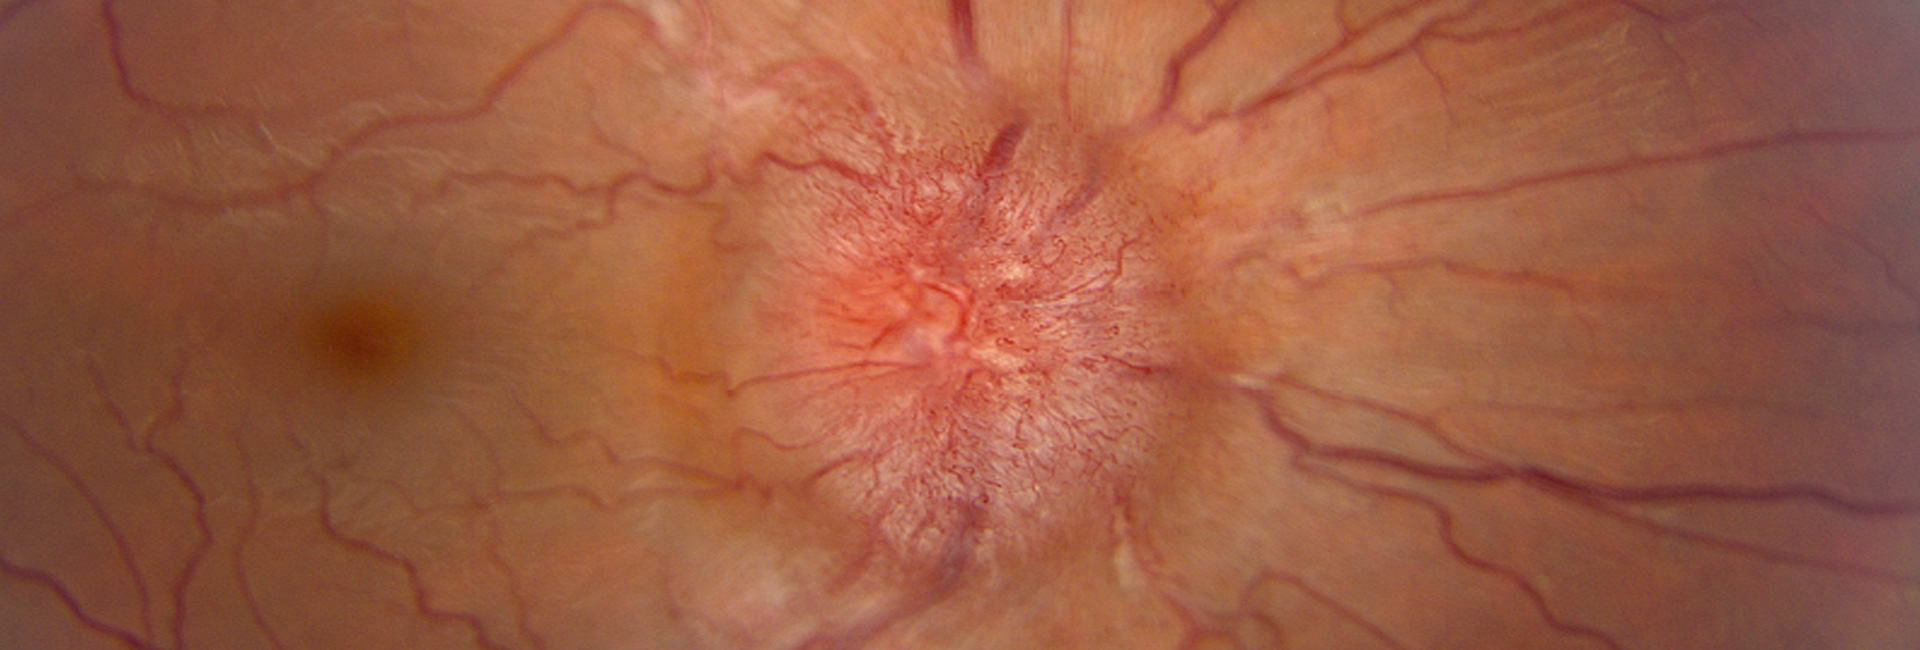 Grading Papilledema, image of grade 4 or 5 papilledema